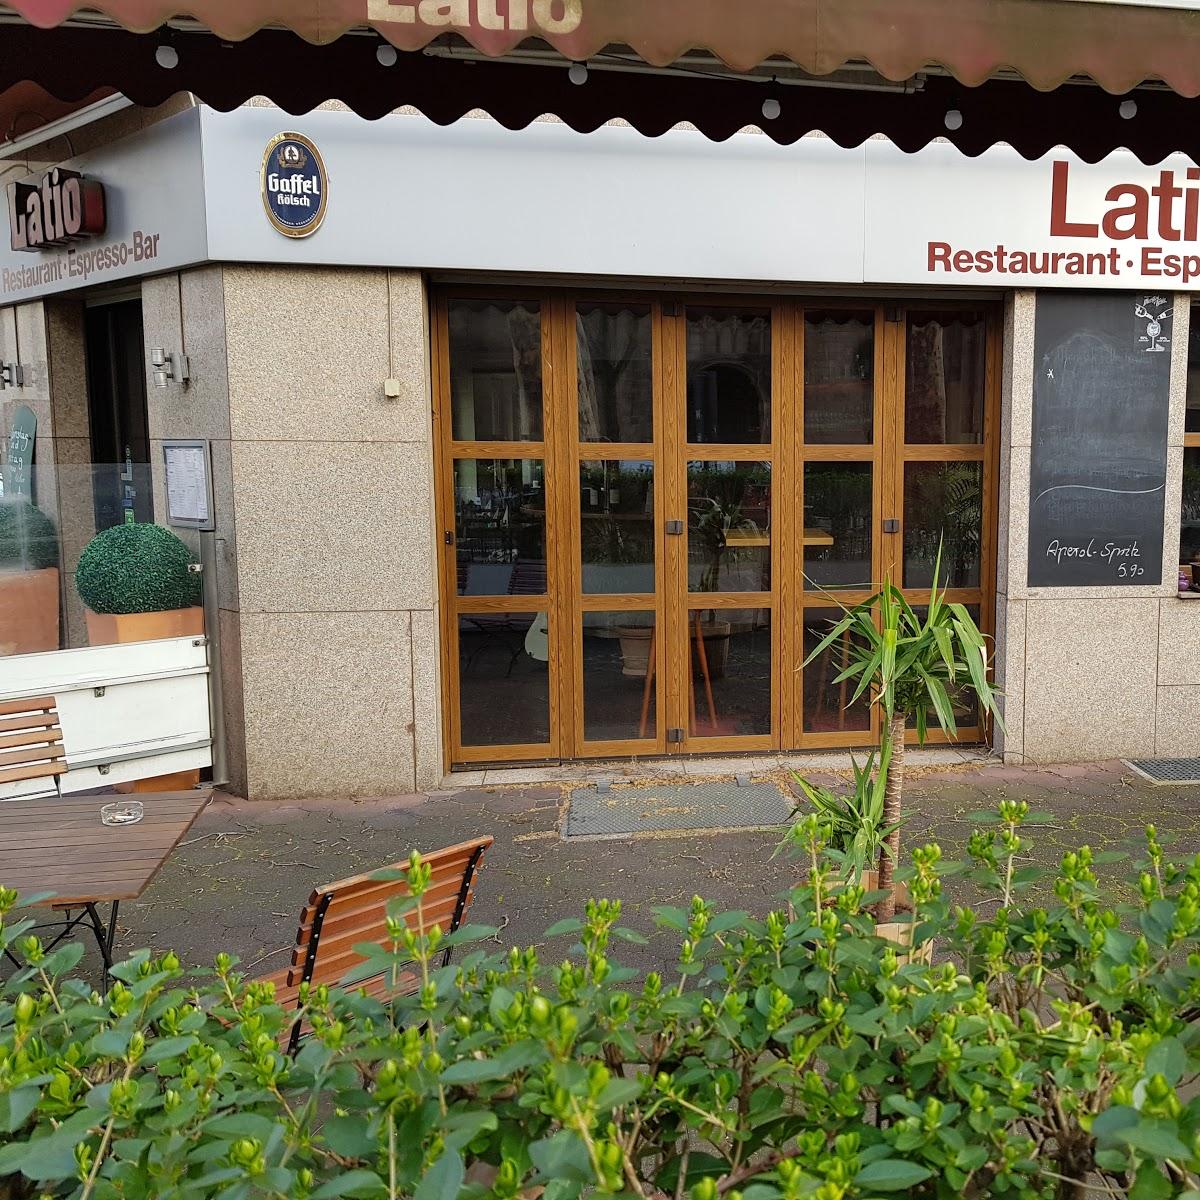 Restaurant "Latio" in Köln